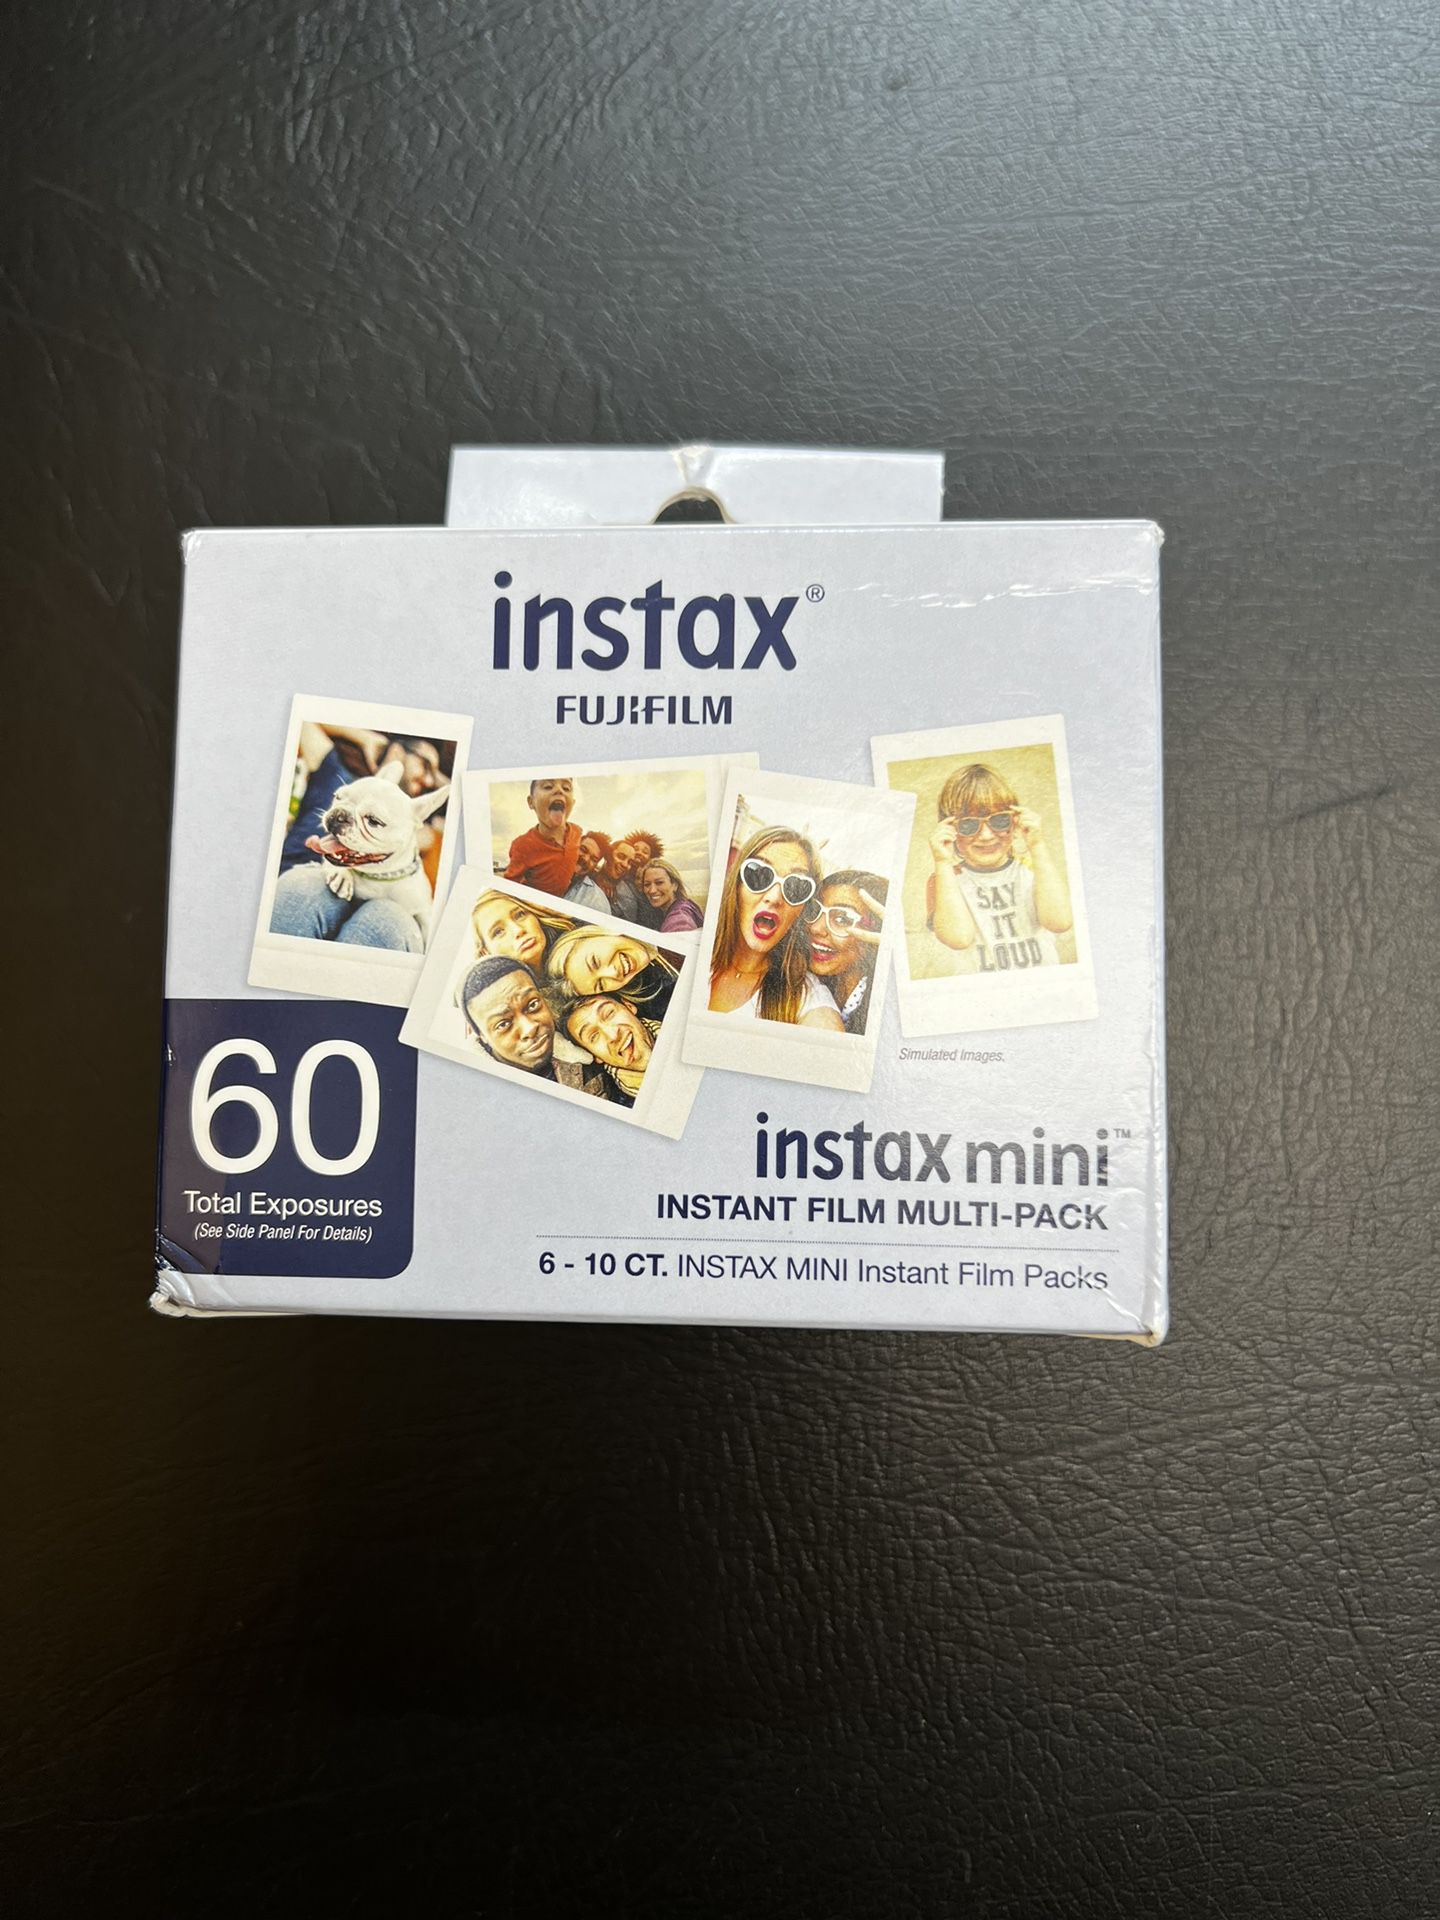 Fujifilm Instax Mini 6-10 Count Instant Film Packs 60 Total Exp. 10/25